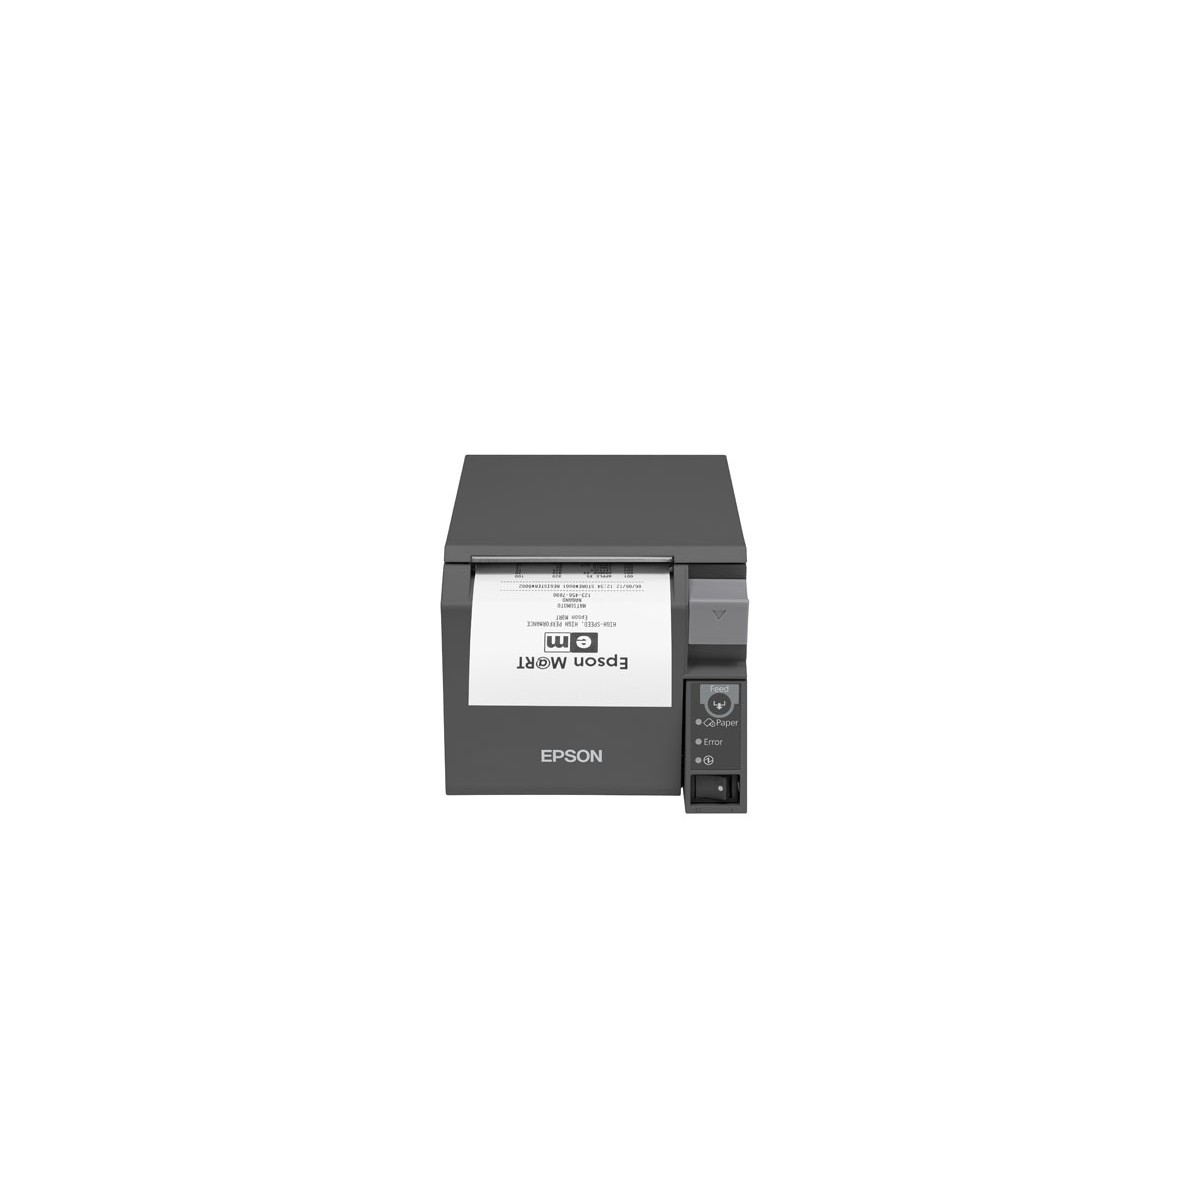 Epson TM-T70II (022A1) - Thermal - POS printer - 180 x 180 DPI - 250 mm-sec - 8.3 cm - Wired